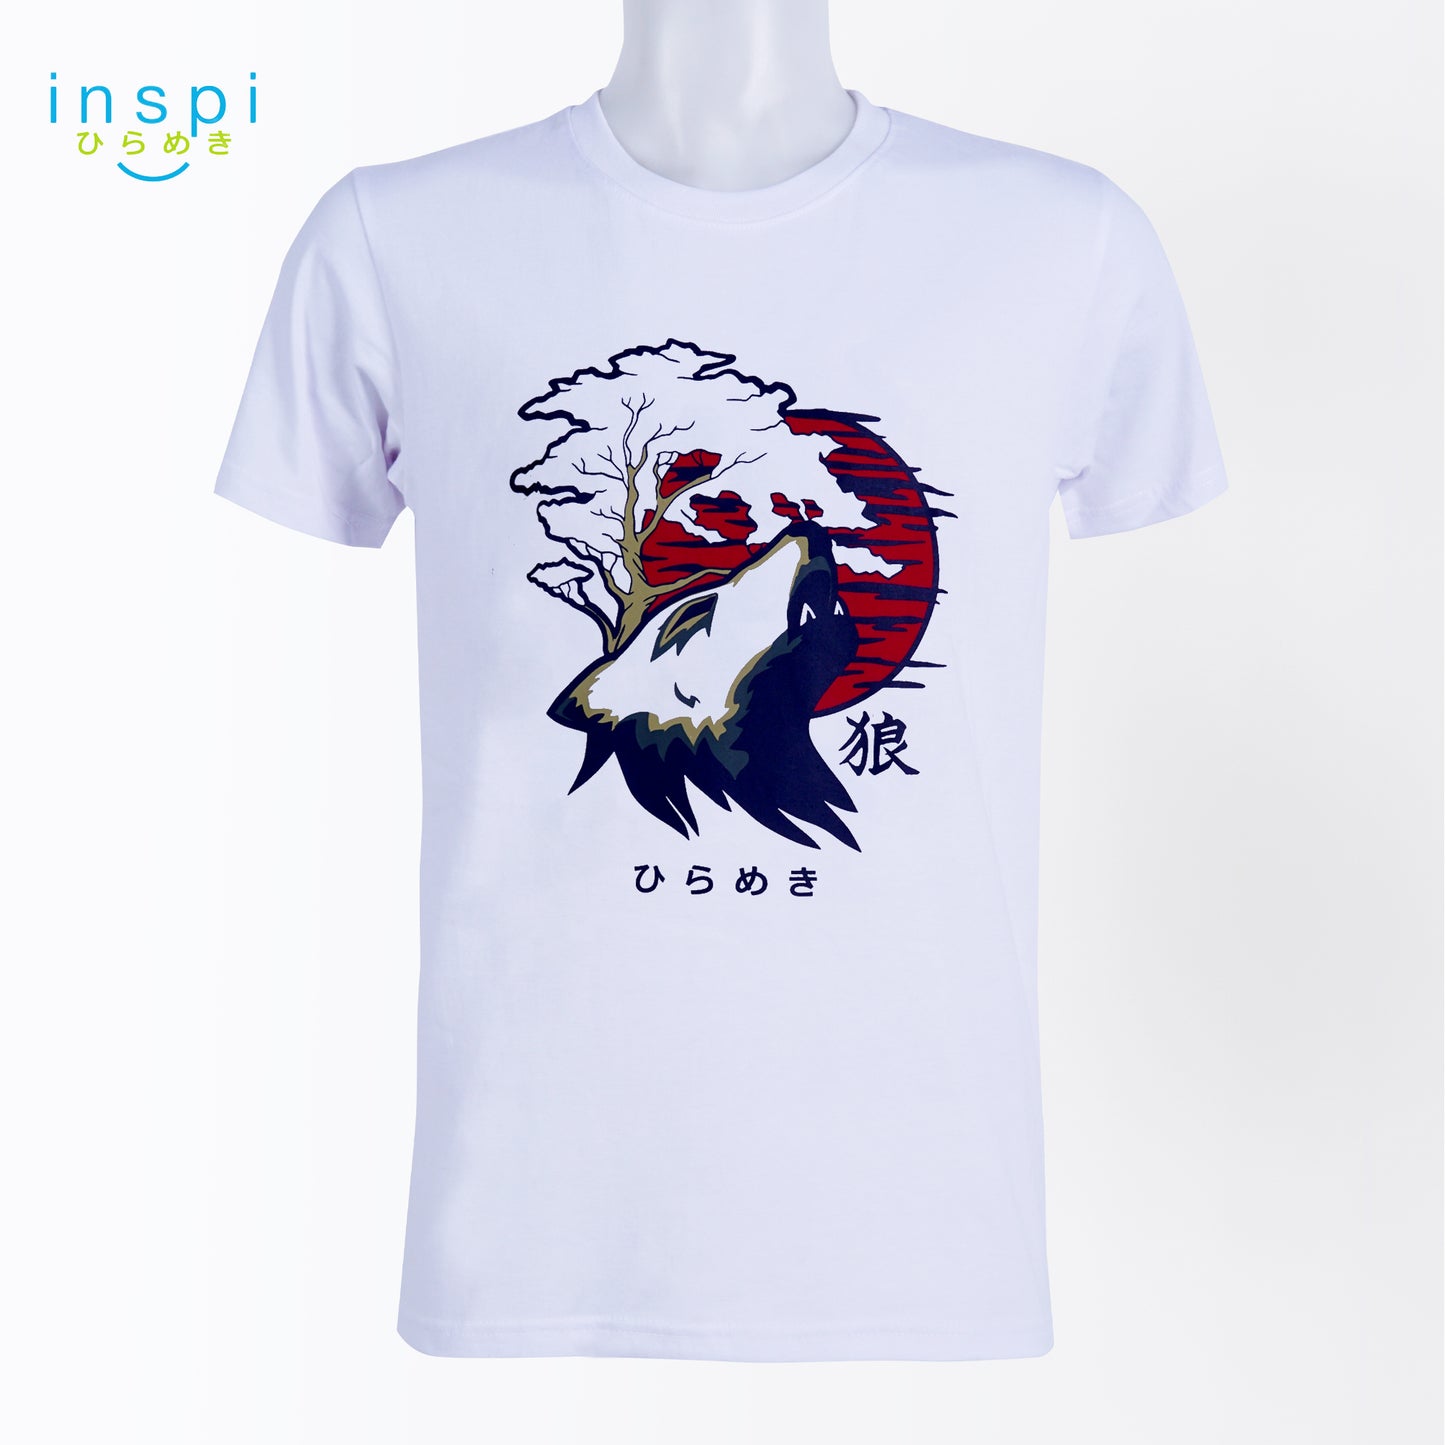 INSPI Tees Okami Wolf Graphic Tshirt